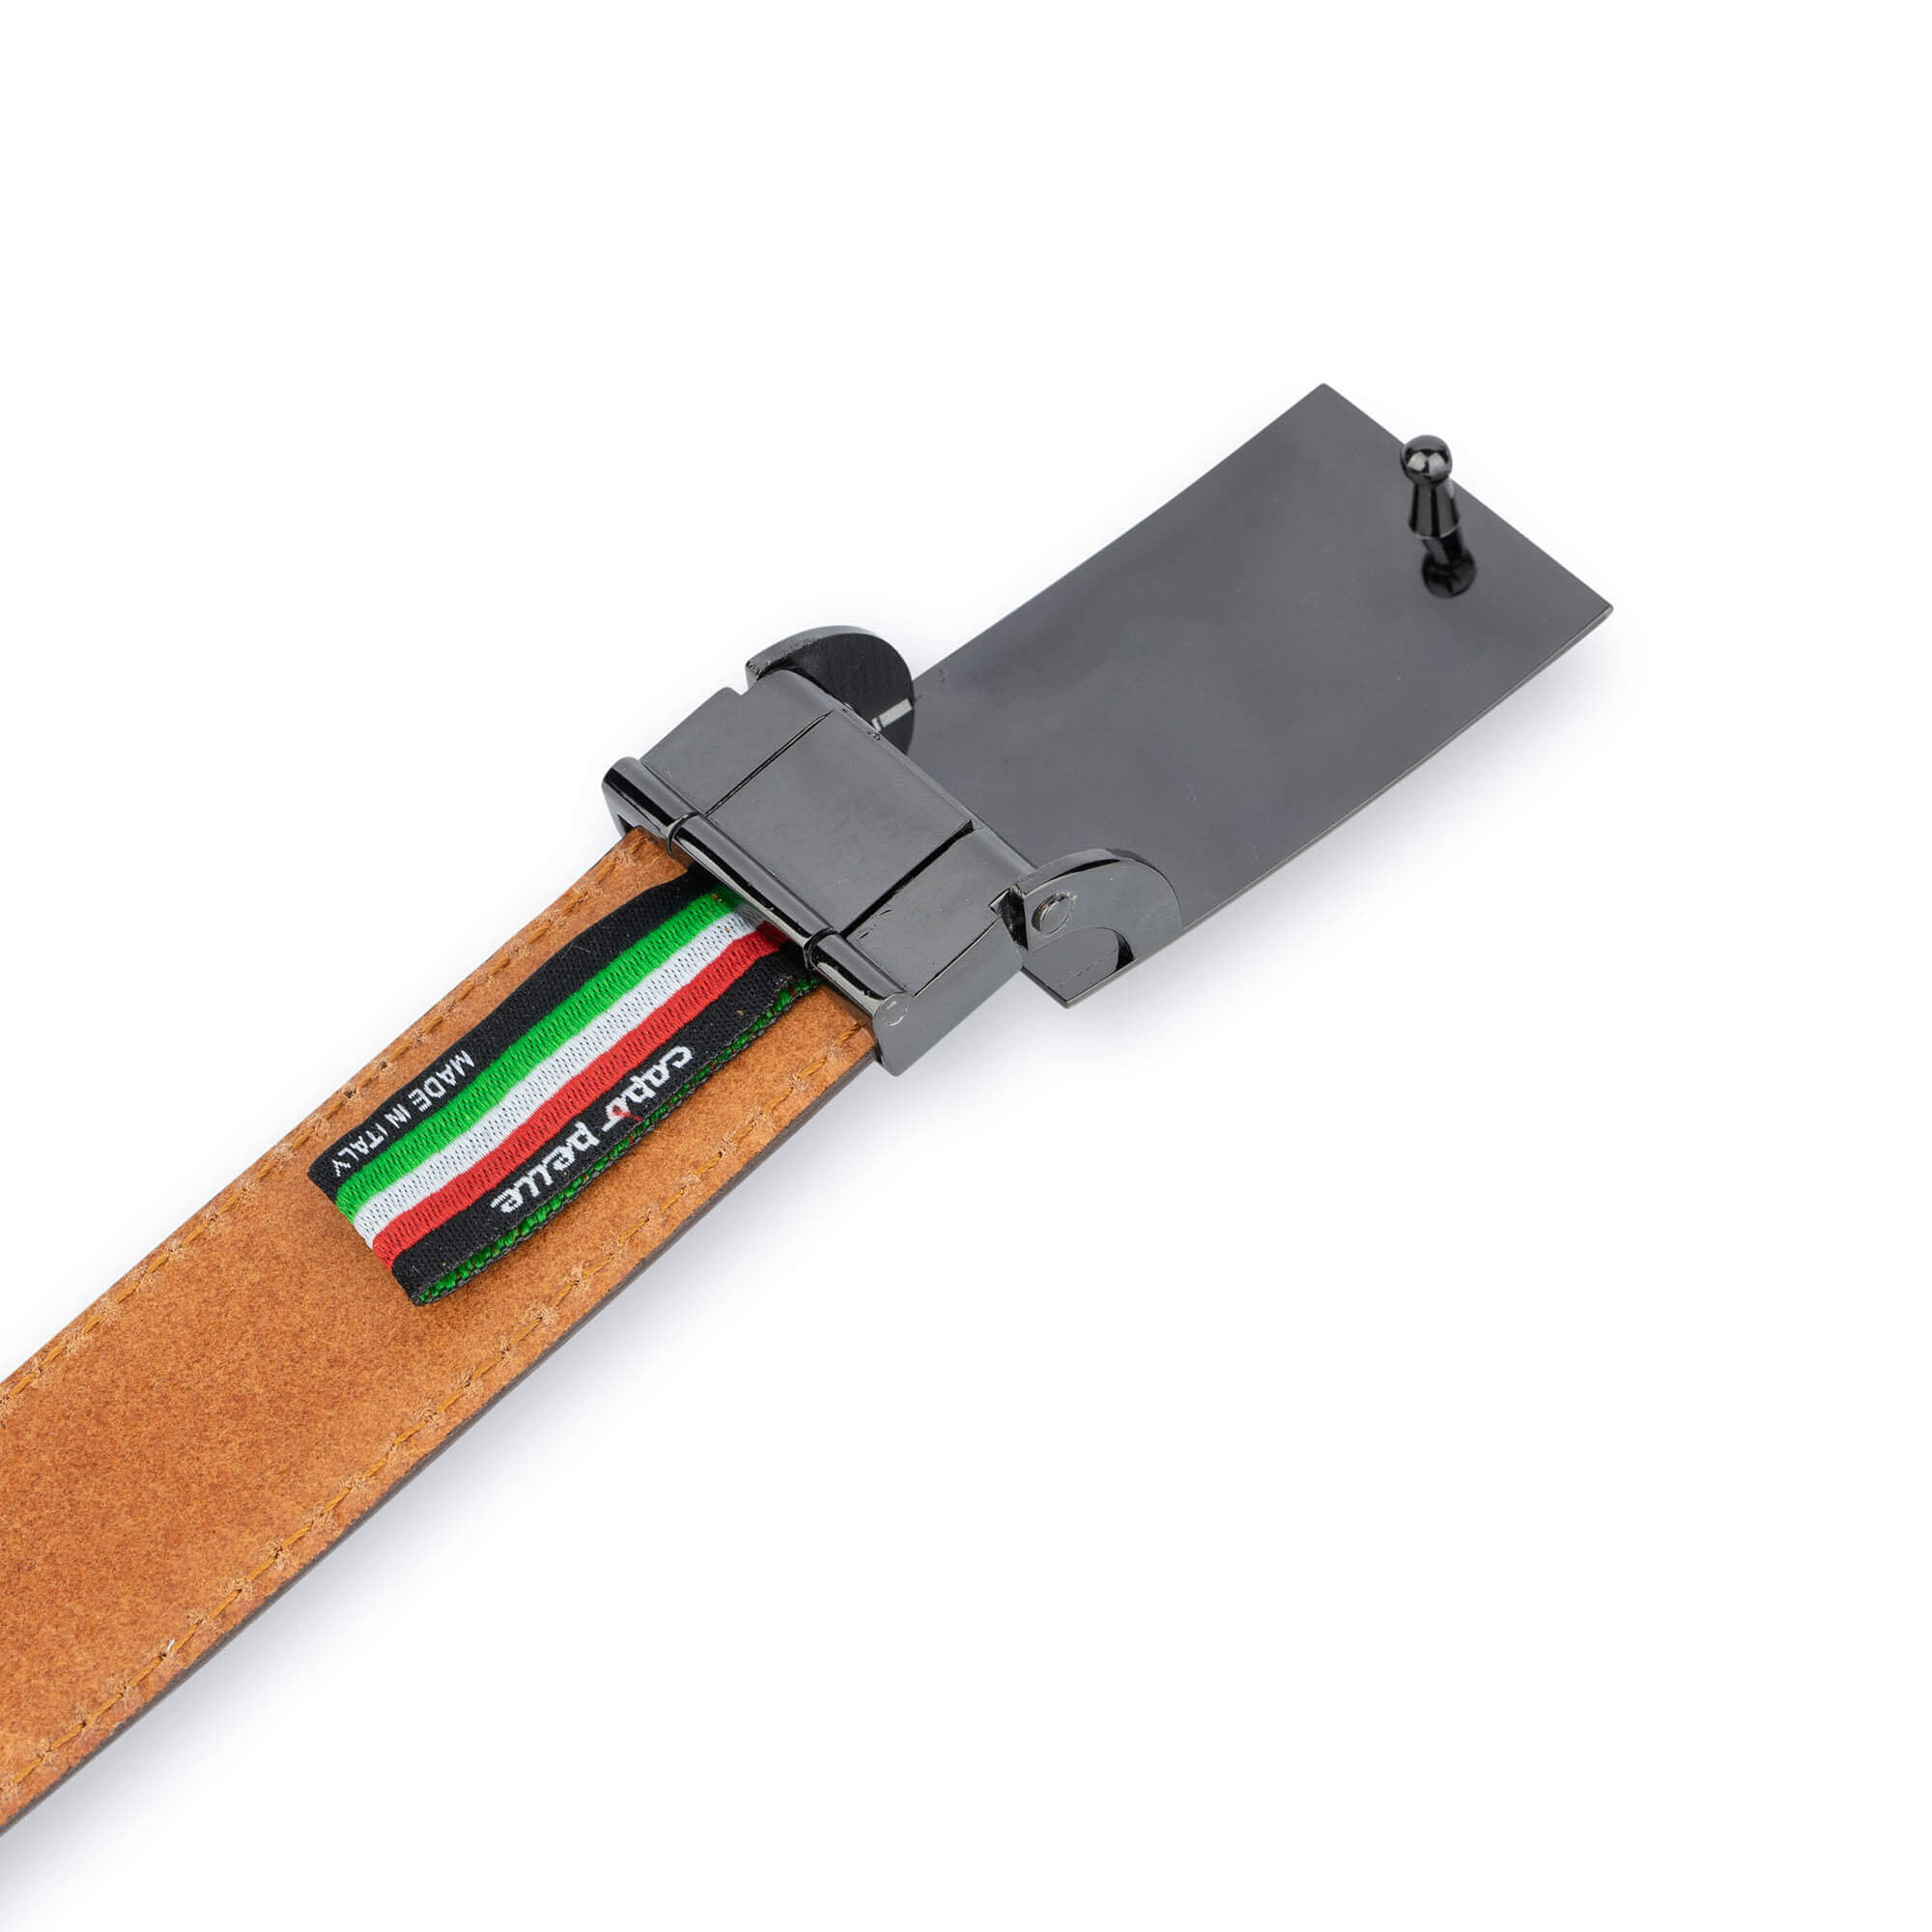 Buy Men Brown Solid Genuine Leather Belt Online - 720193